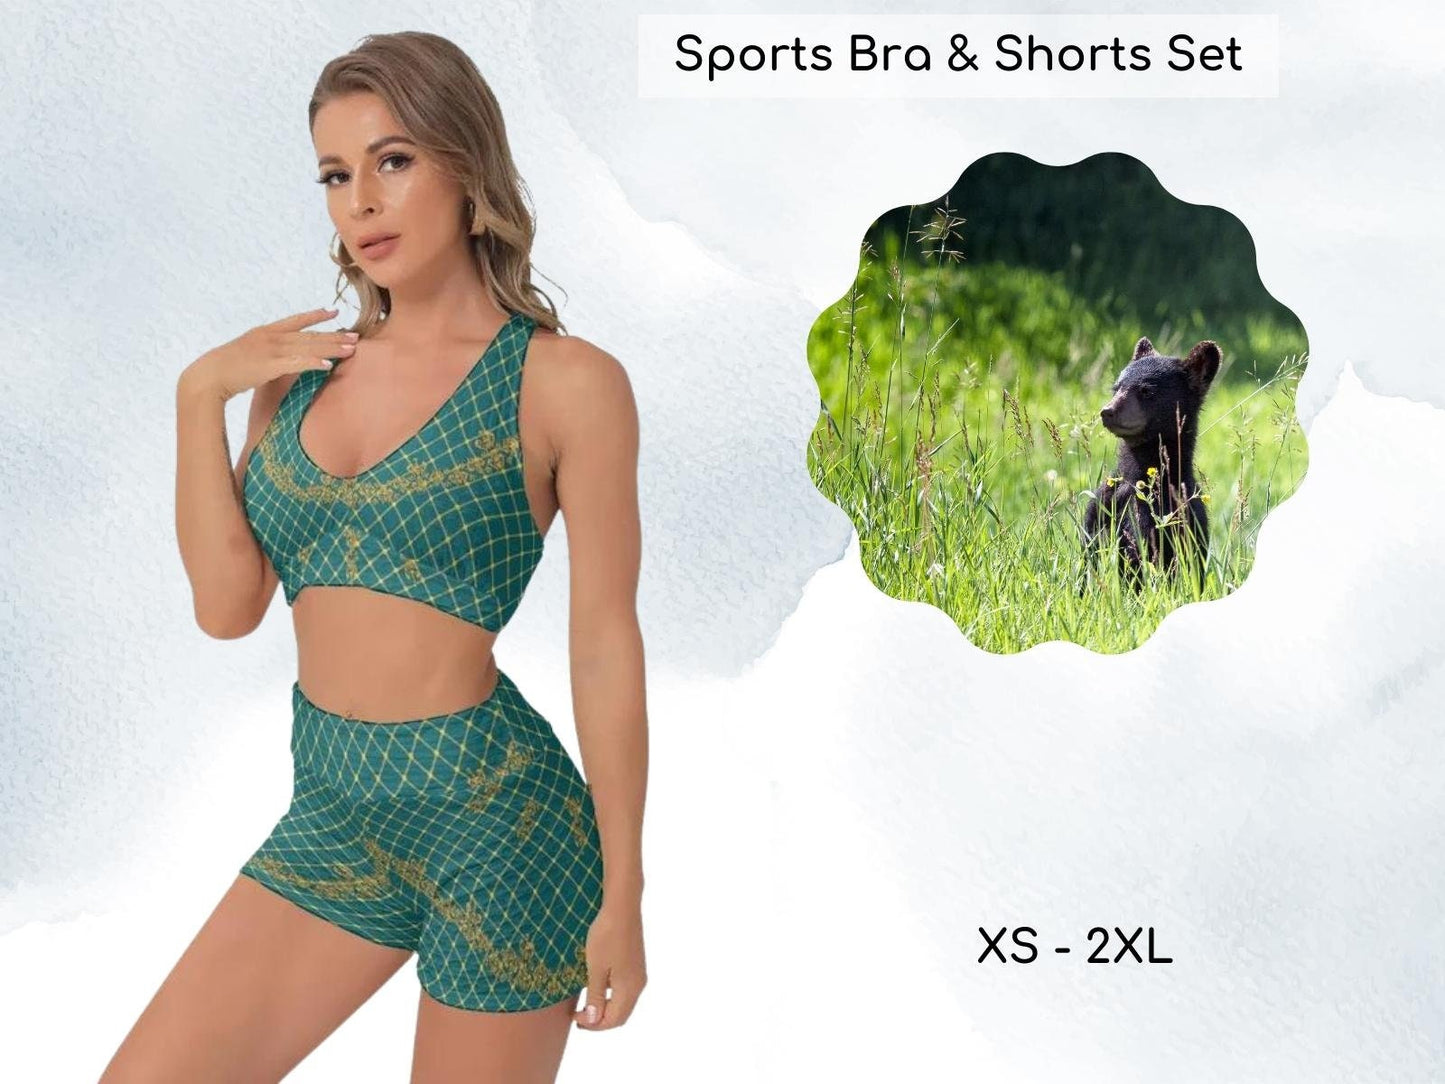 Merida Brave Inspired Sports Bra & Sports Shorts Set, Honeycomb Fabric, Yoga Set, Cosplay Apparel, Halloween Costume,